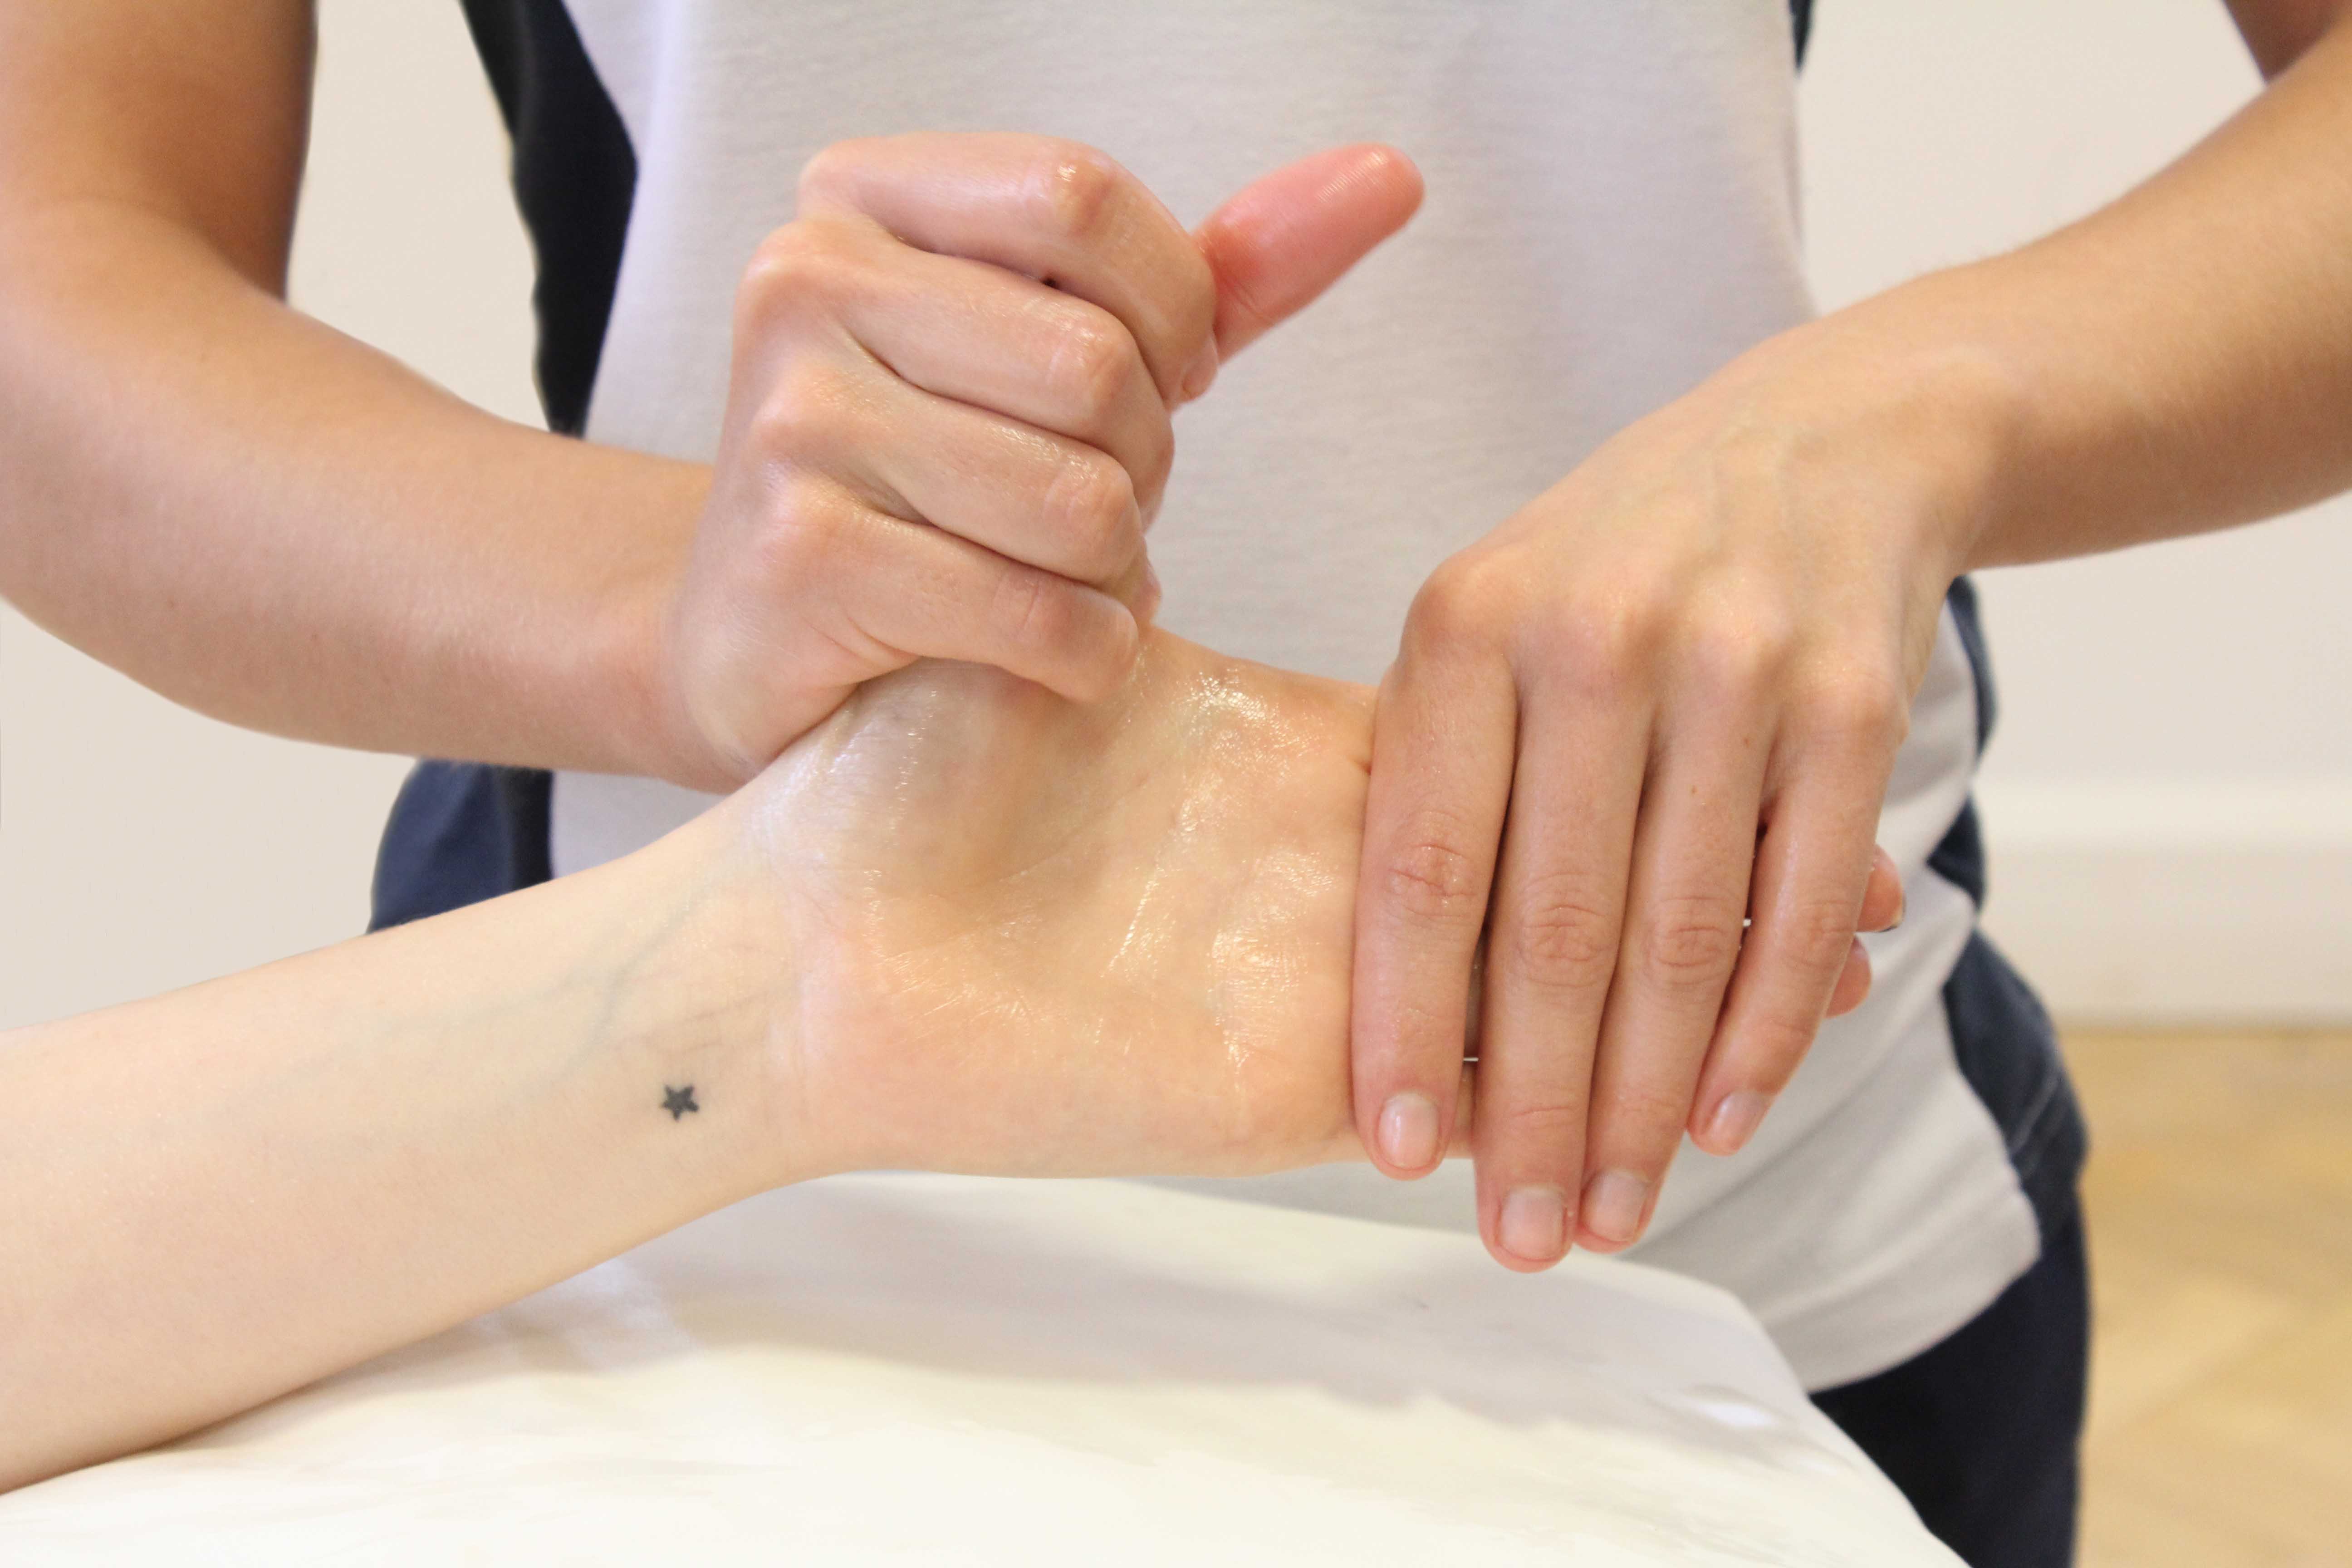 Soft tissue massage of the hand